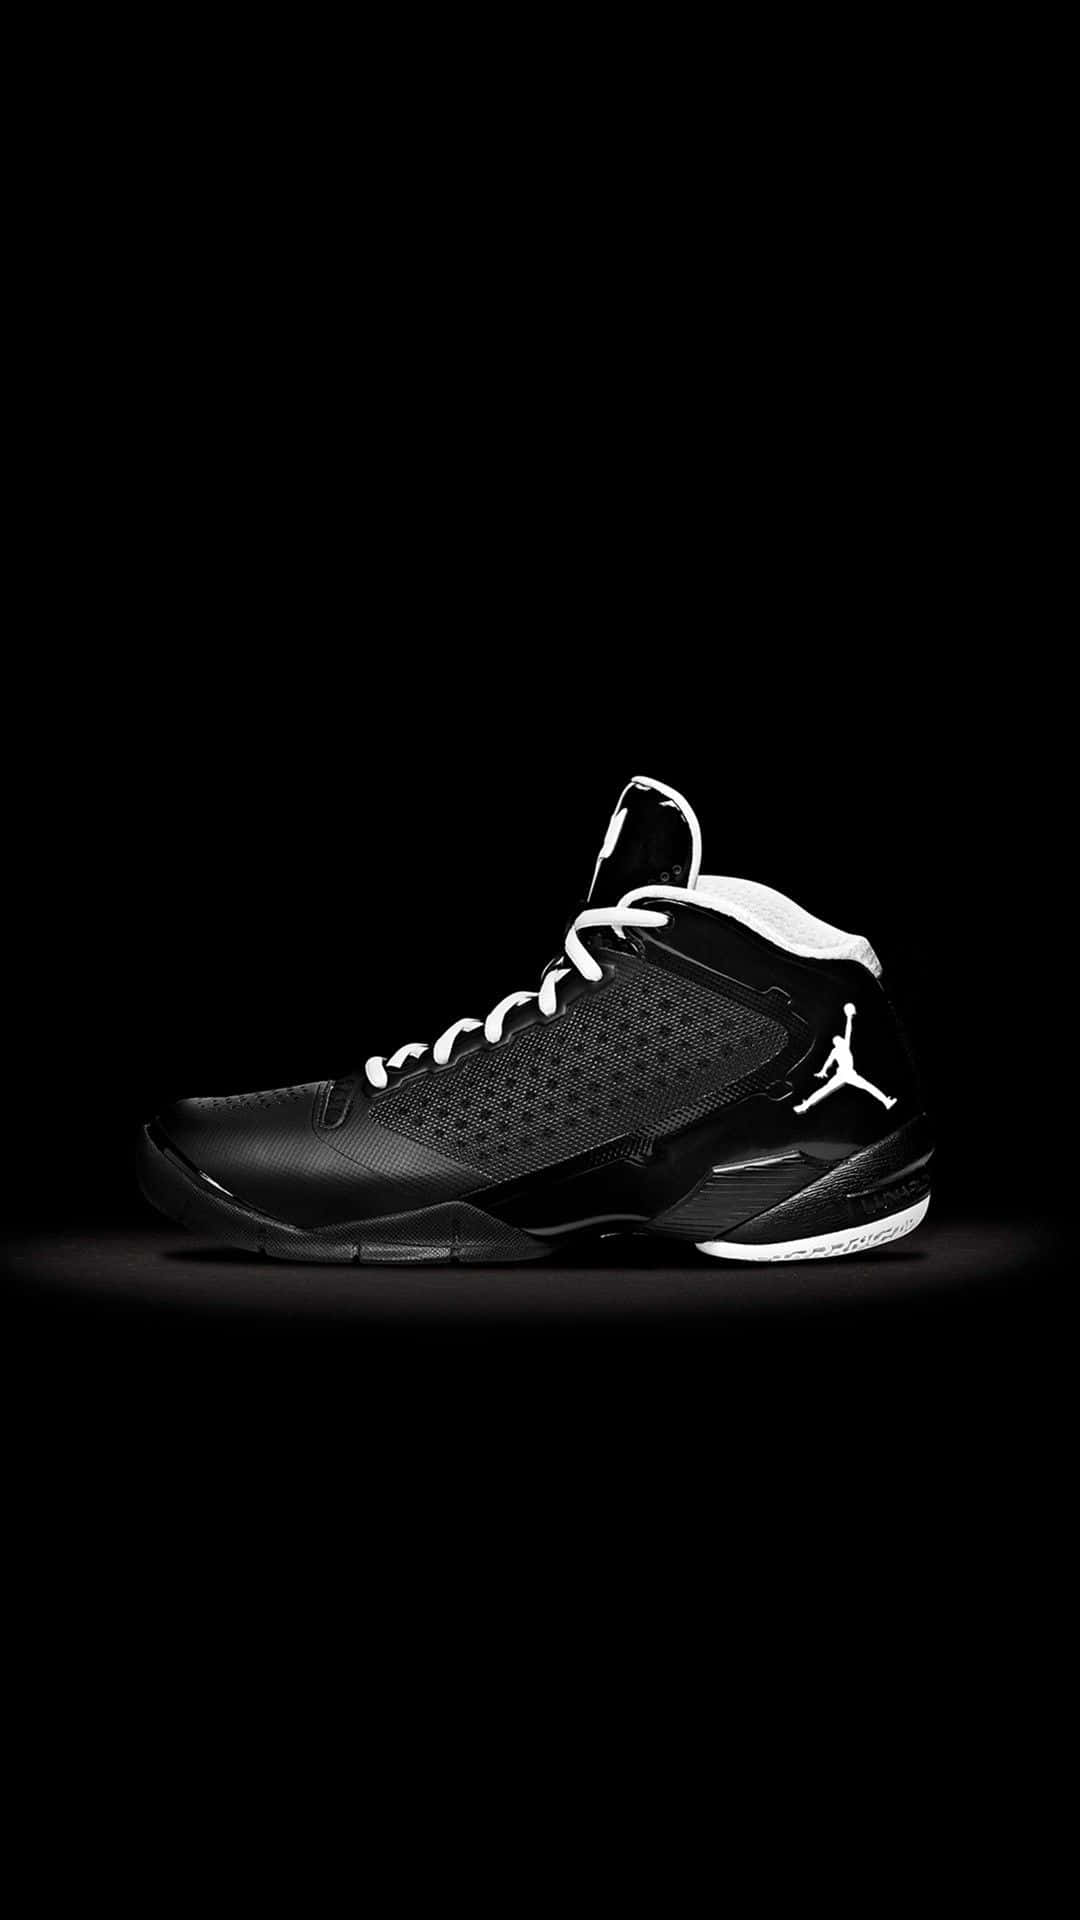 Jordan Xiii - Black And White Basketball Shoe Wallpaper